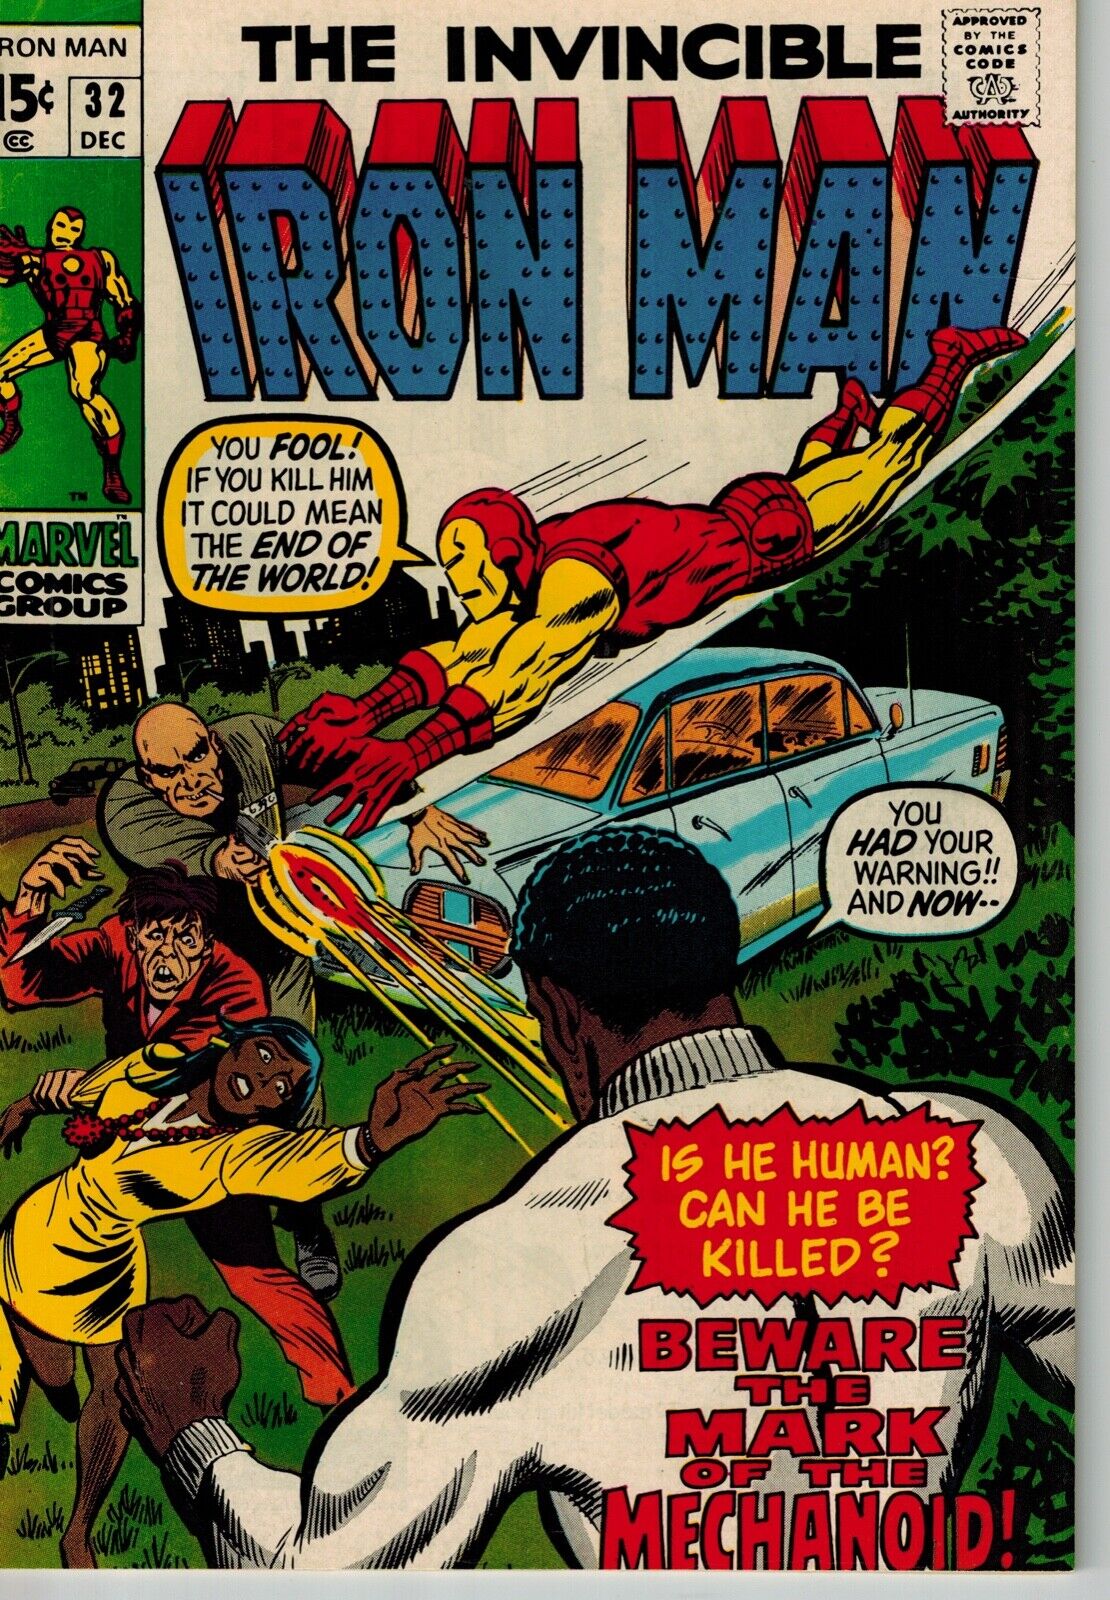 Iron Man #32 Dec 1970